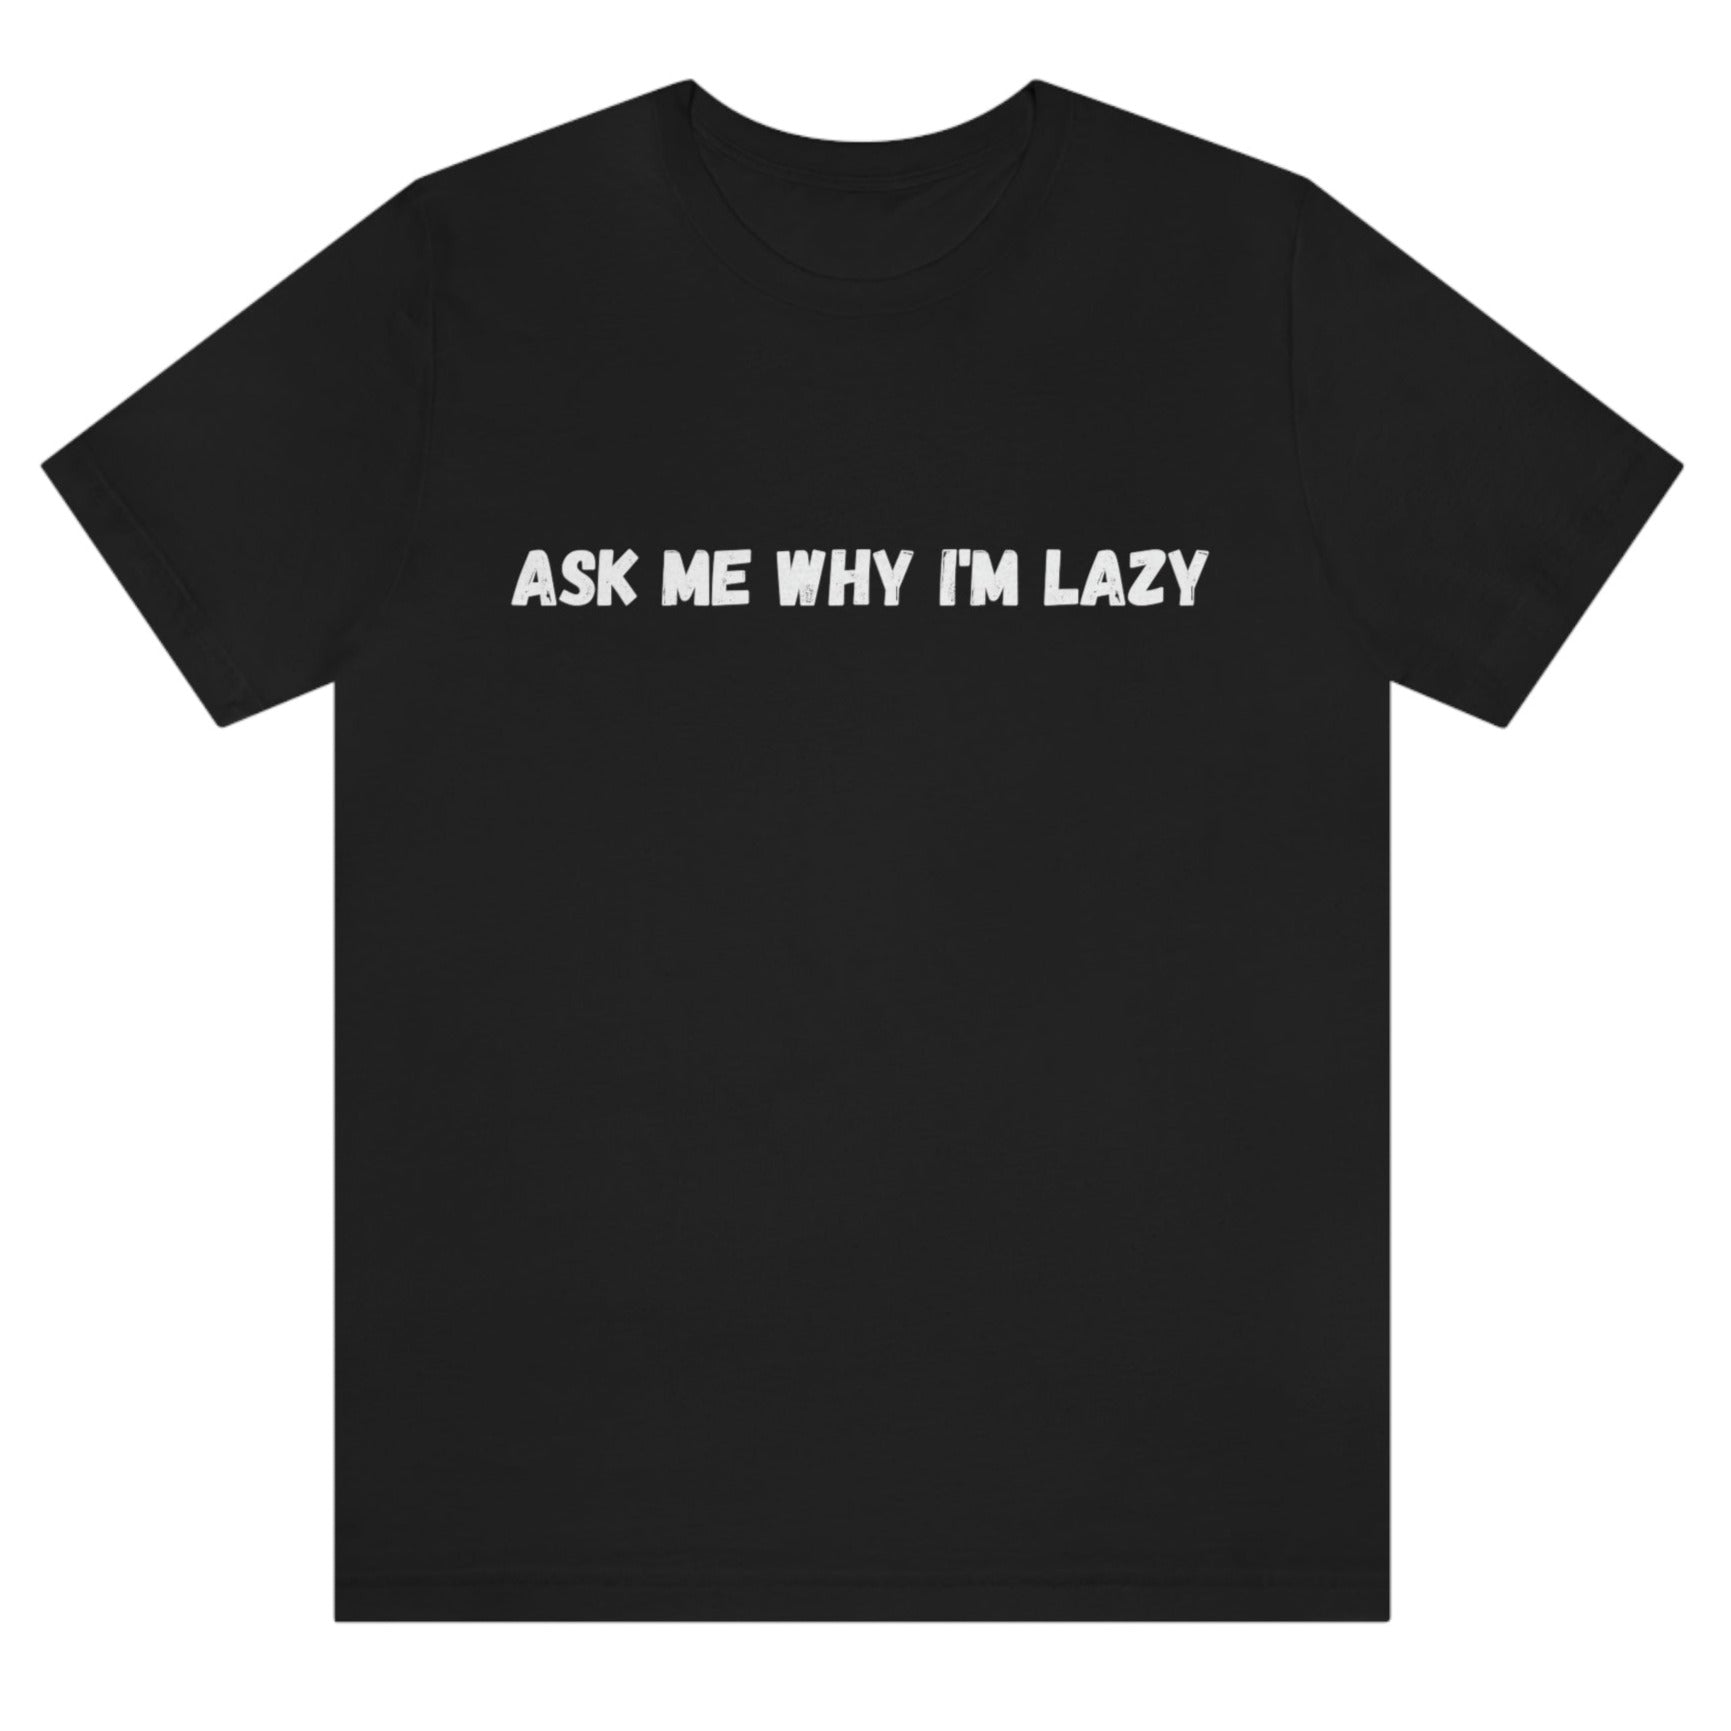 ask-me-why-im-lazy-black-t-shirt-unisex-funny